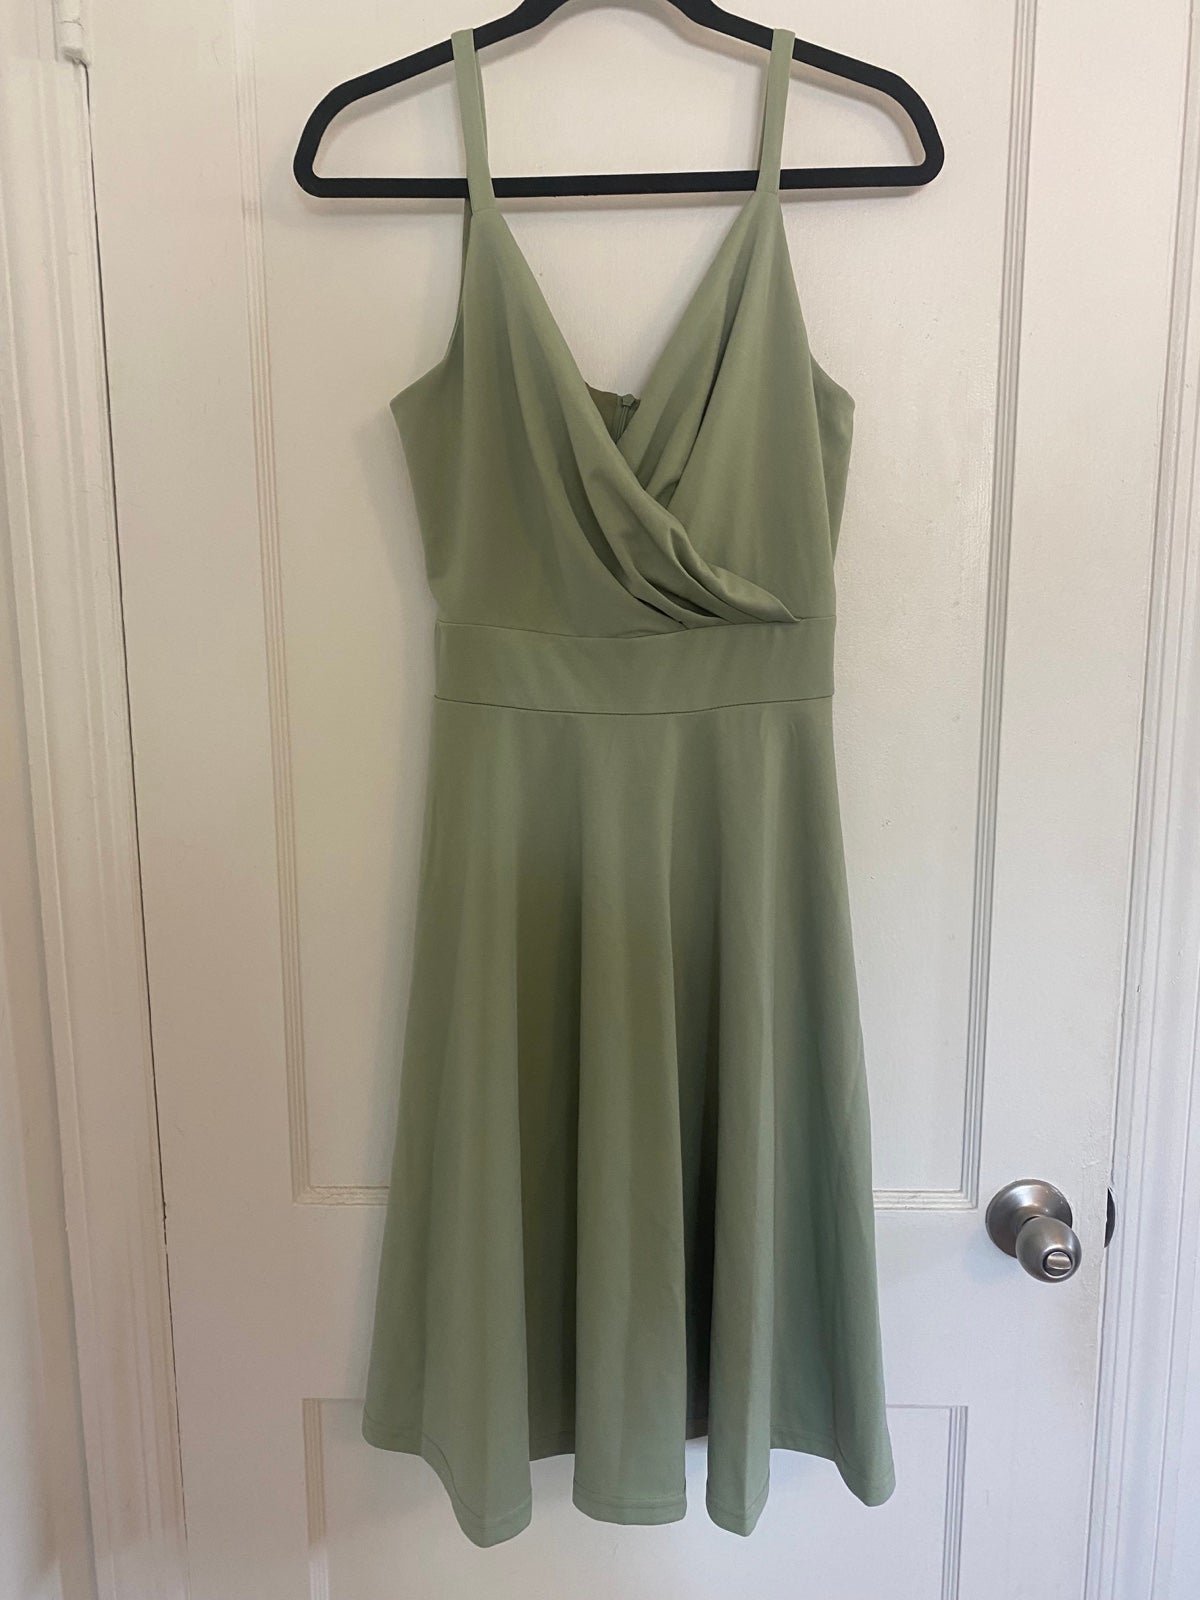 Wholesale price Light green dress jSCsYTqqB well sale